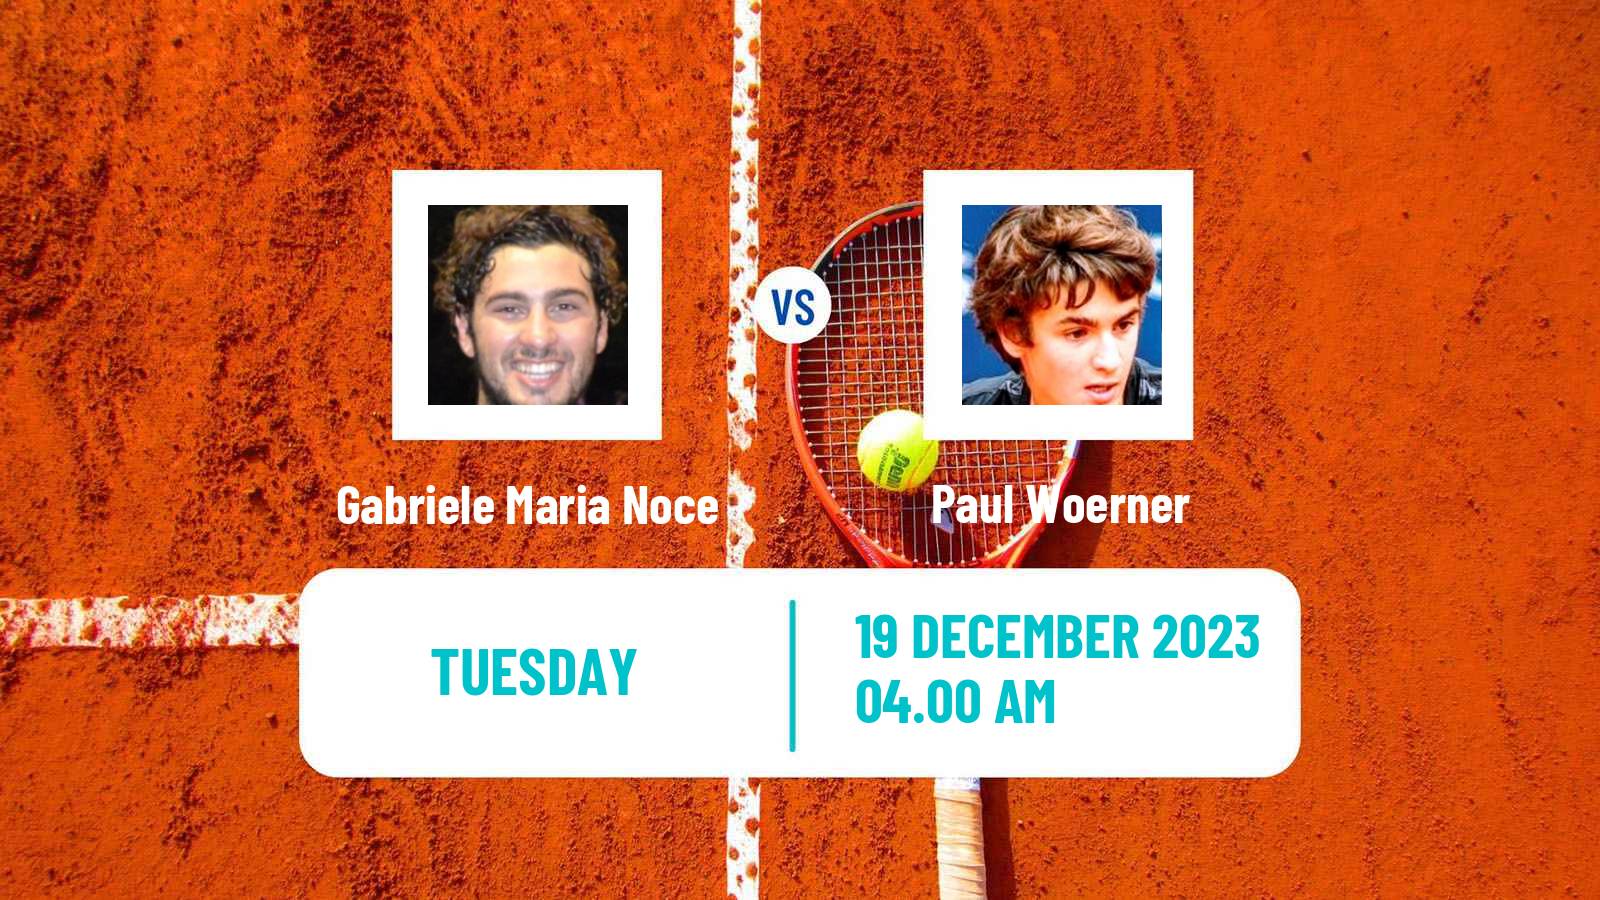 Tennis ITF M15 Antalya 21 Men 2023 Gabriele Maria Noce - Paul Woerner